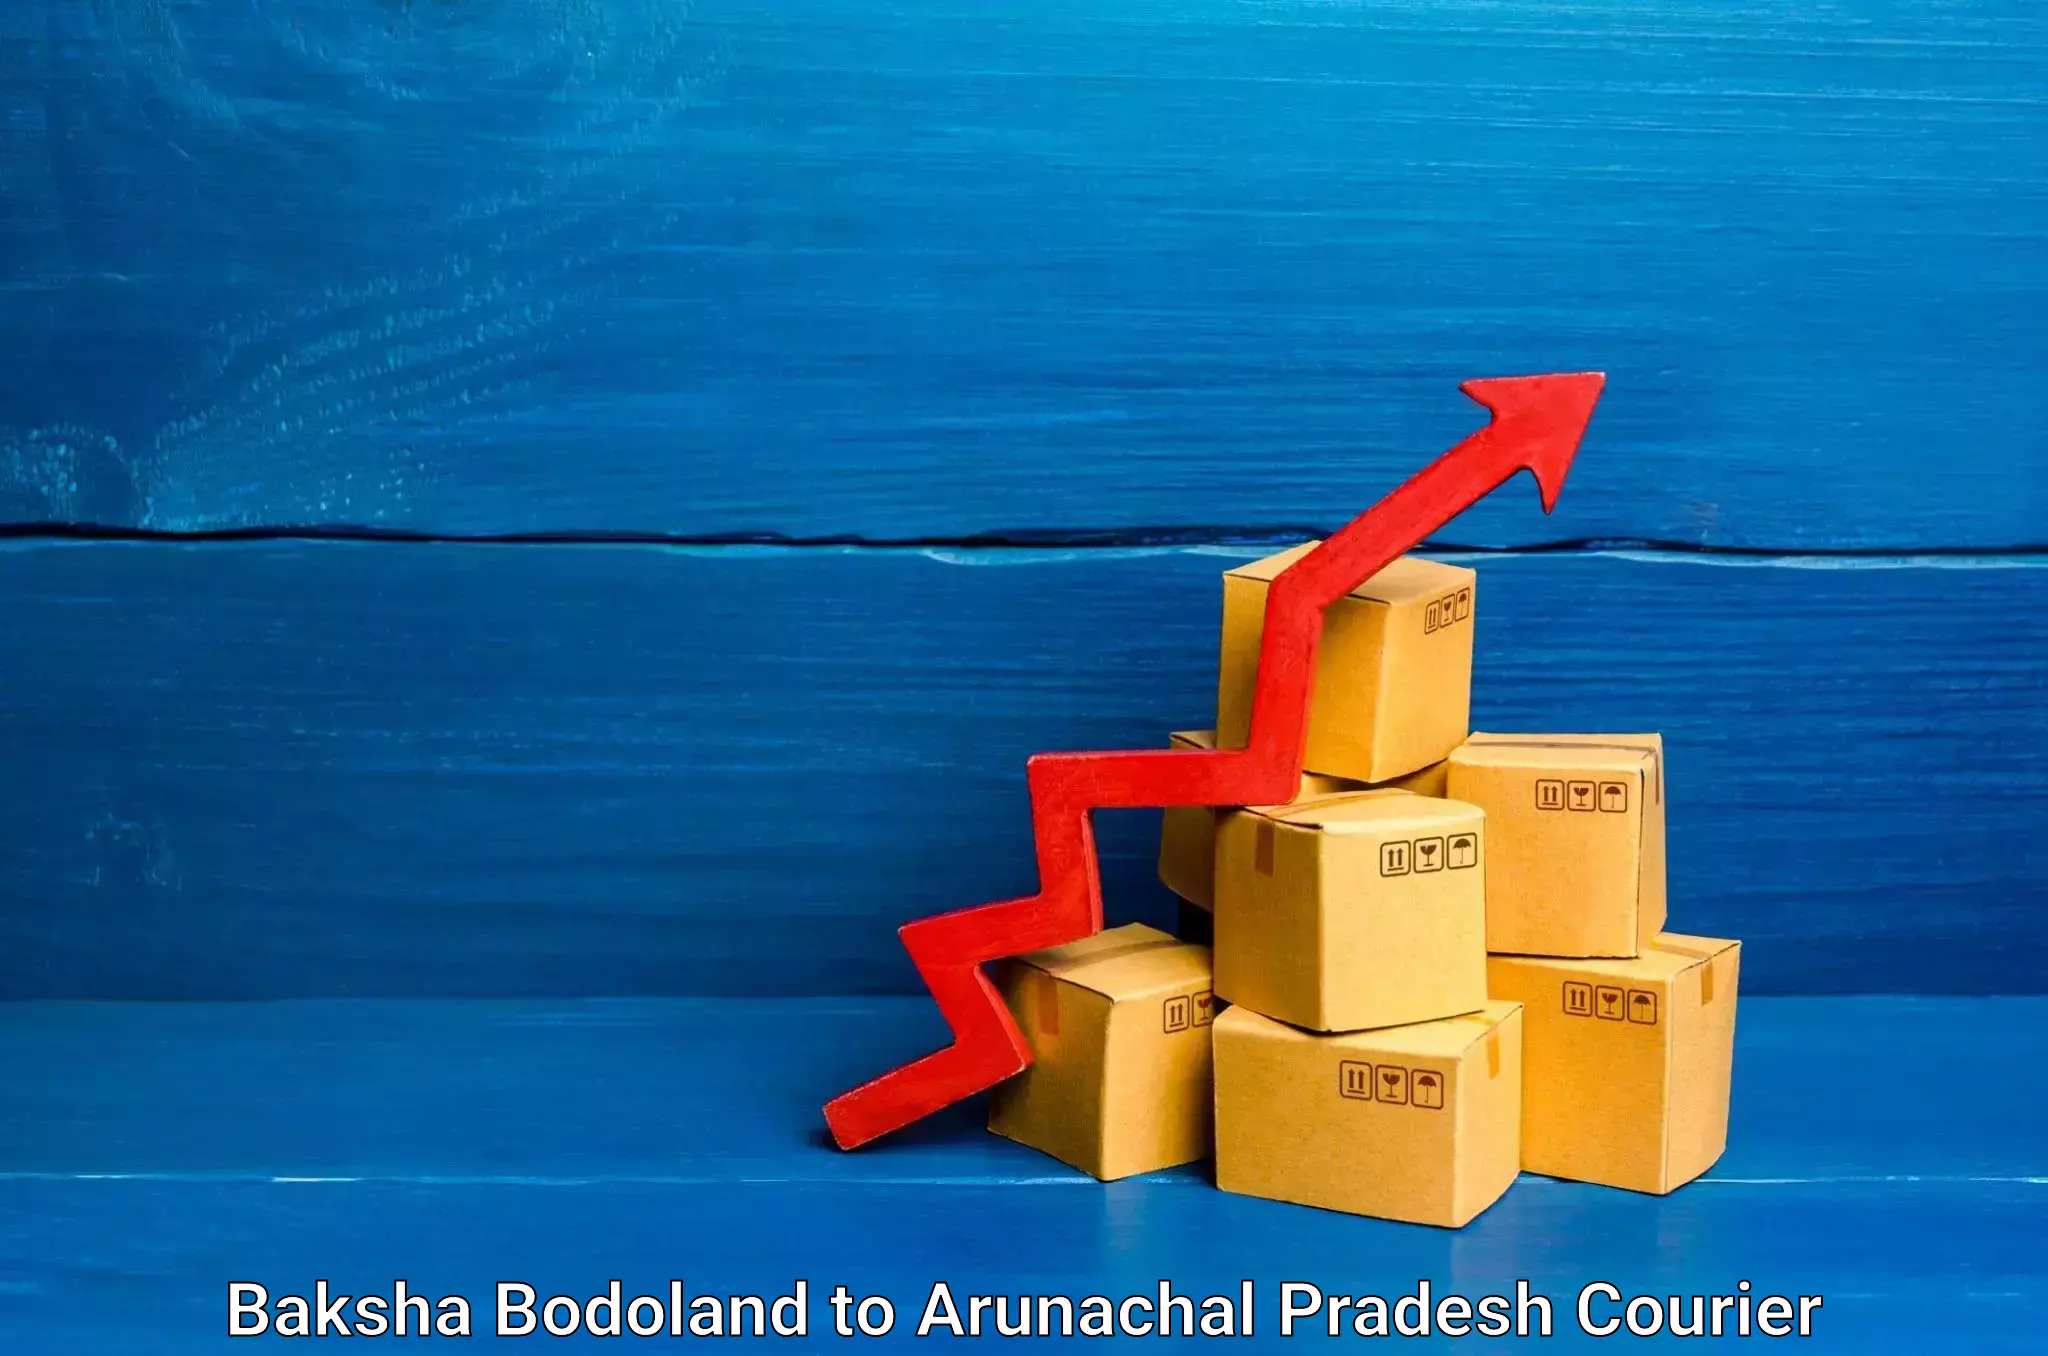 Courier service partnerships Baksha Bodoland to Arunachal Pradesh